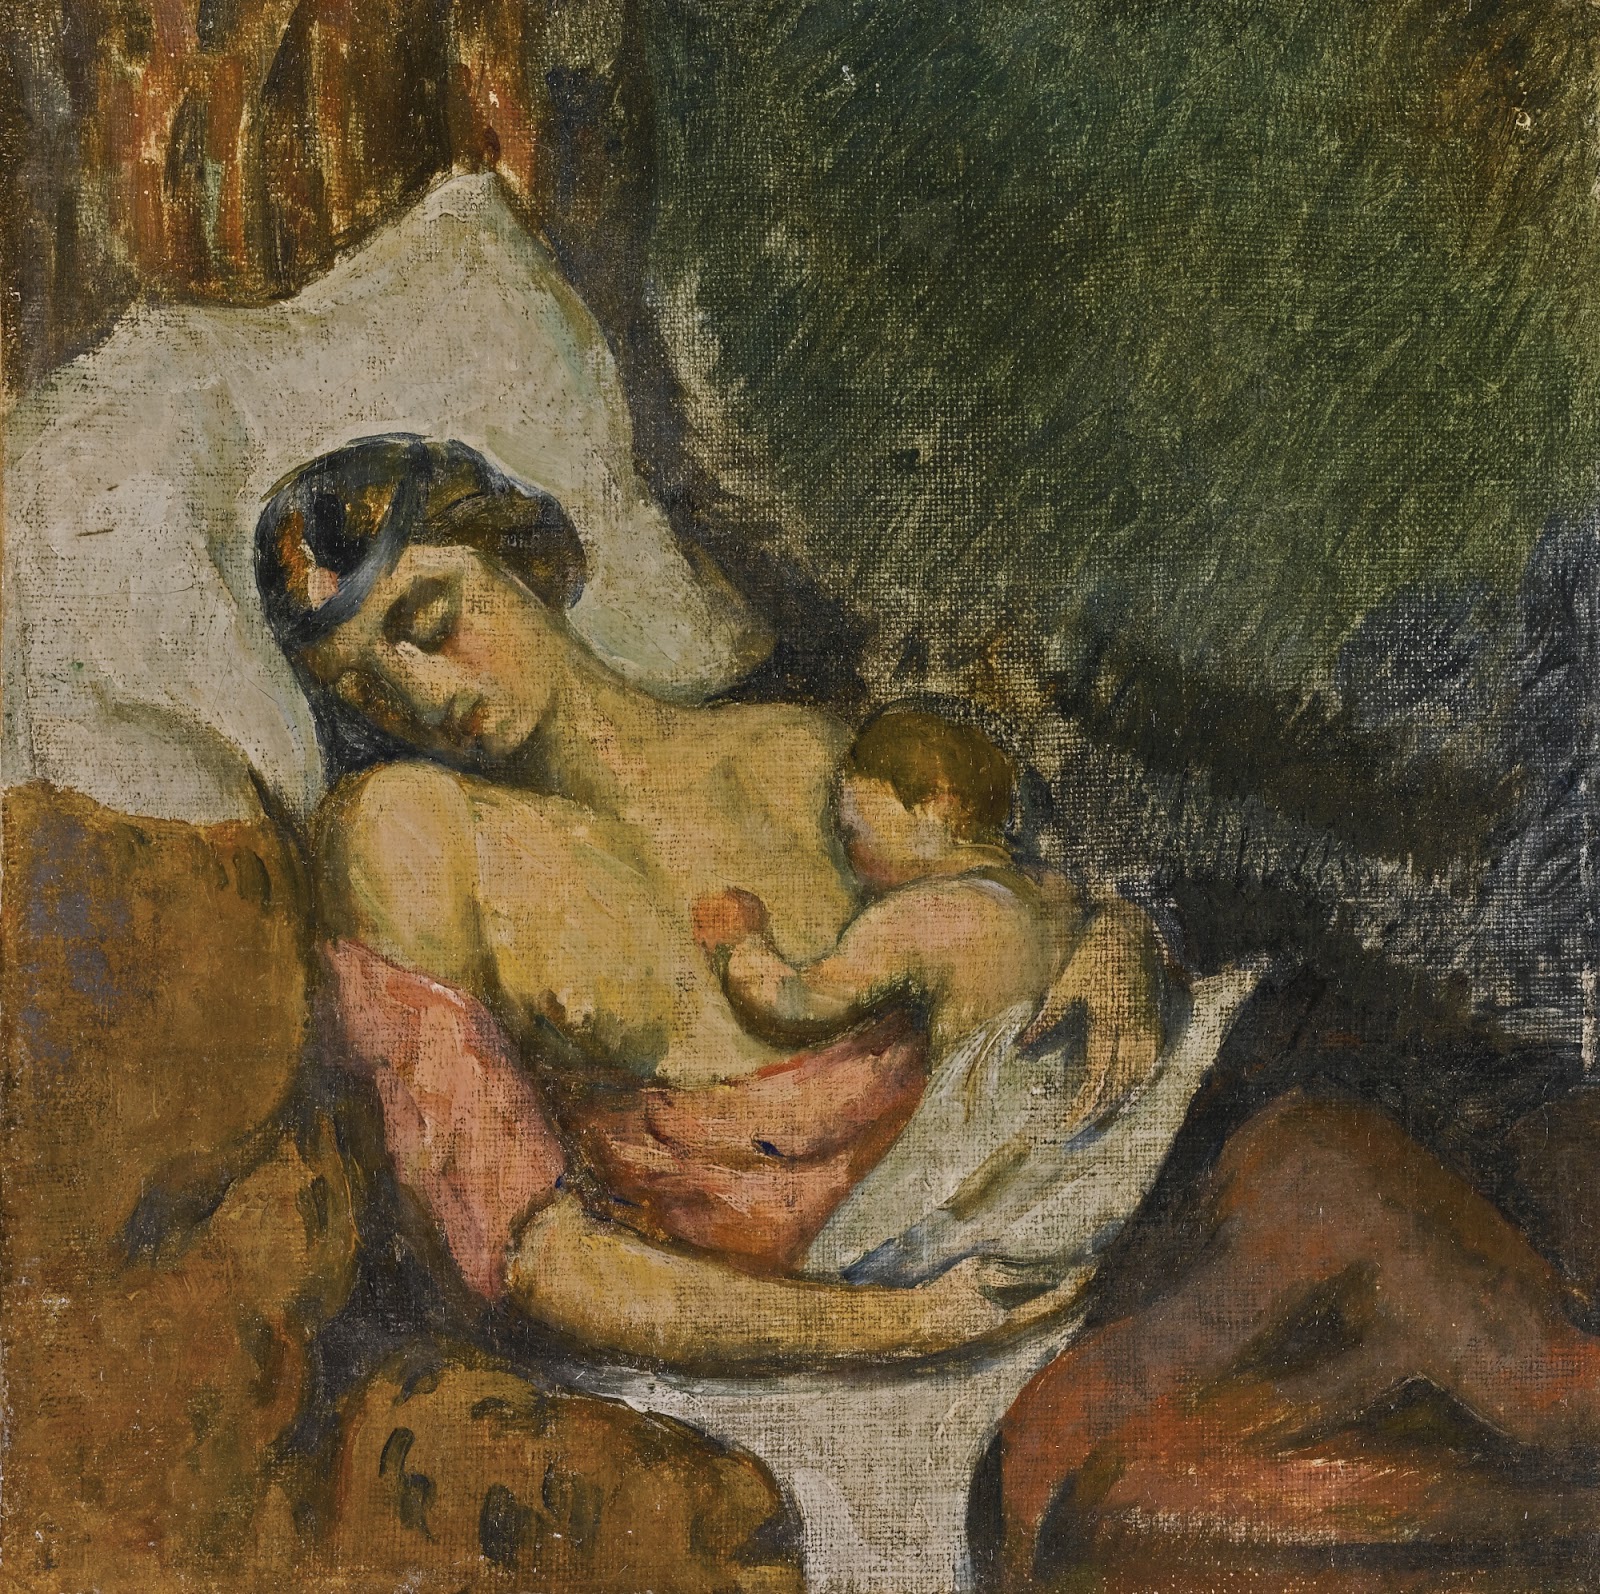 Paul+Cezanne-1839-1906 (178).jpg